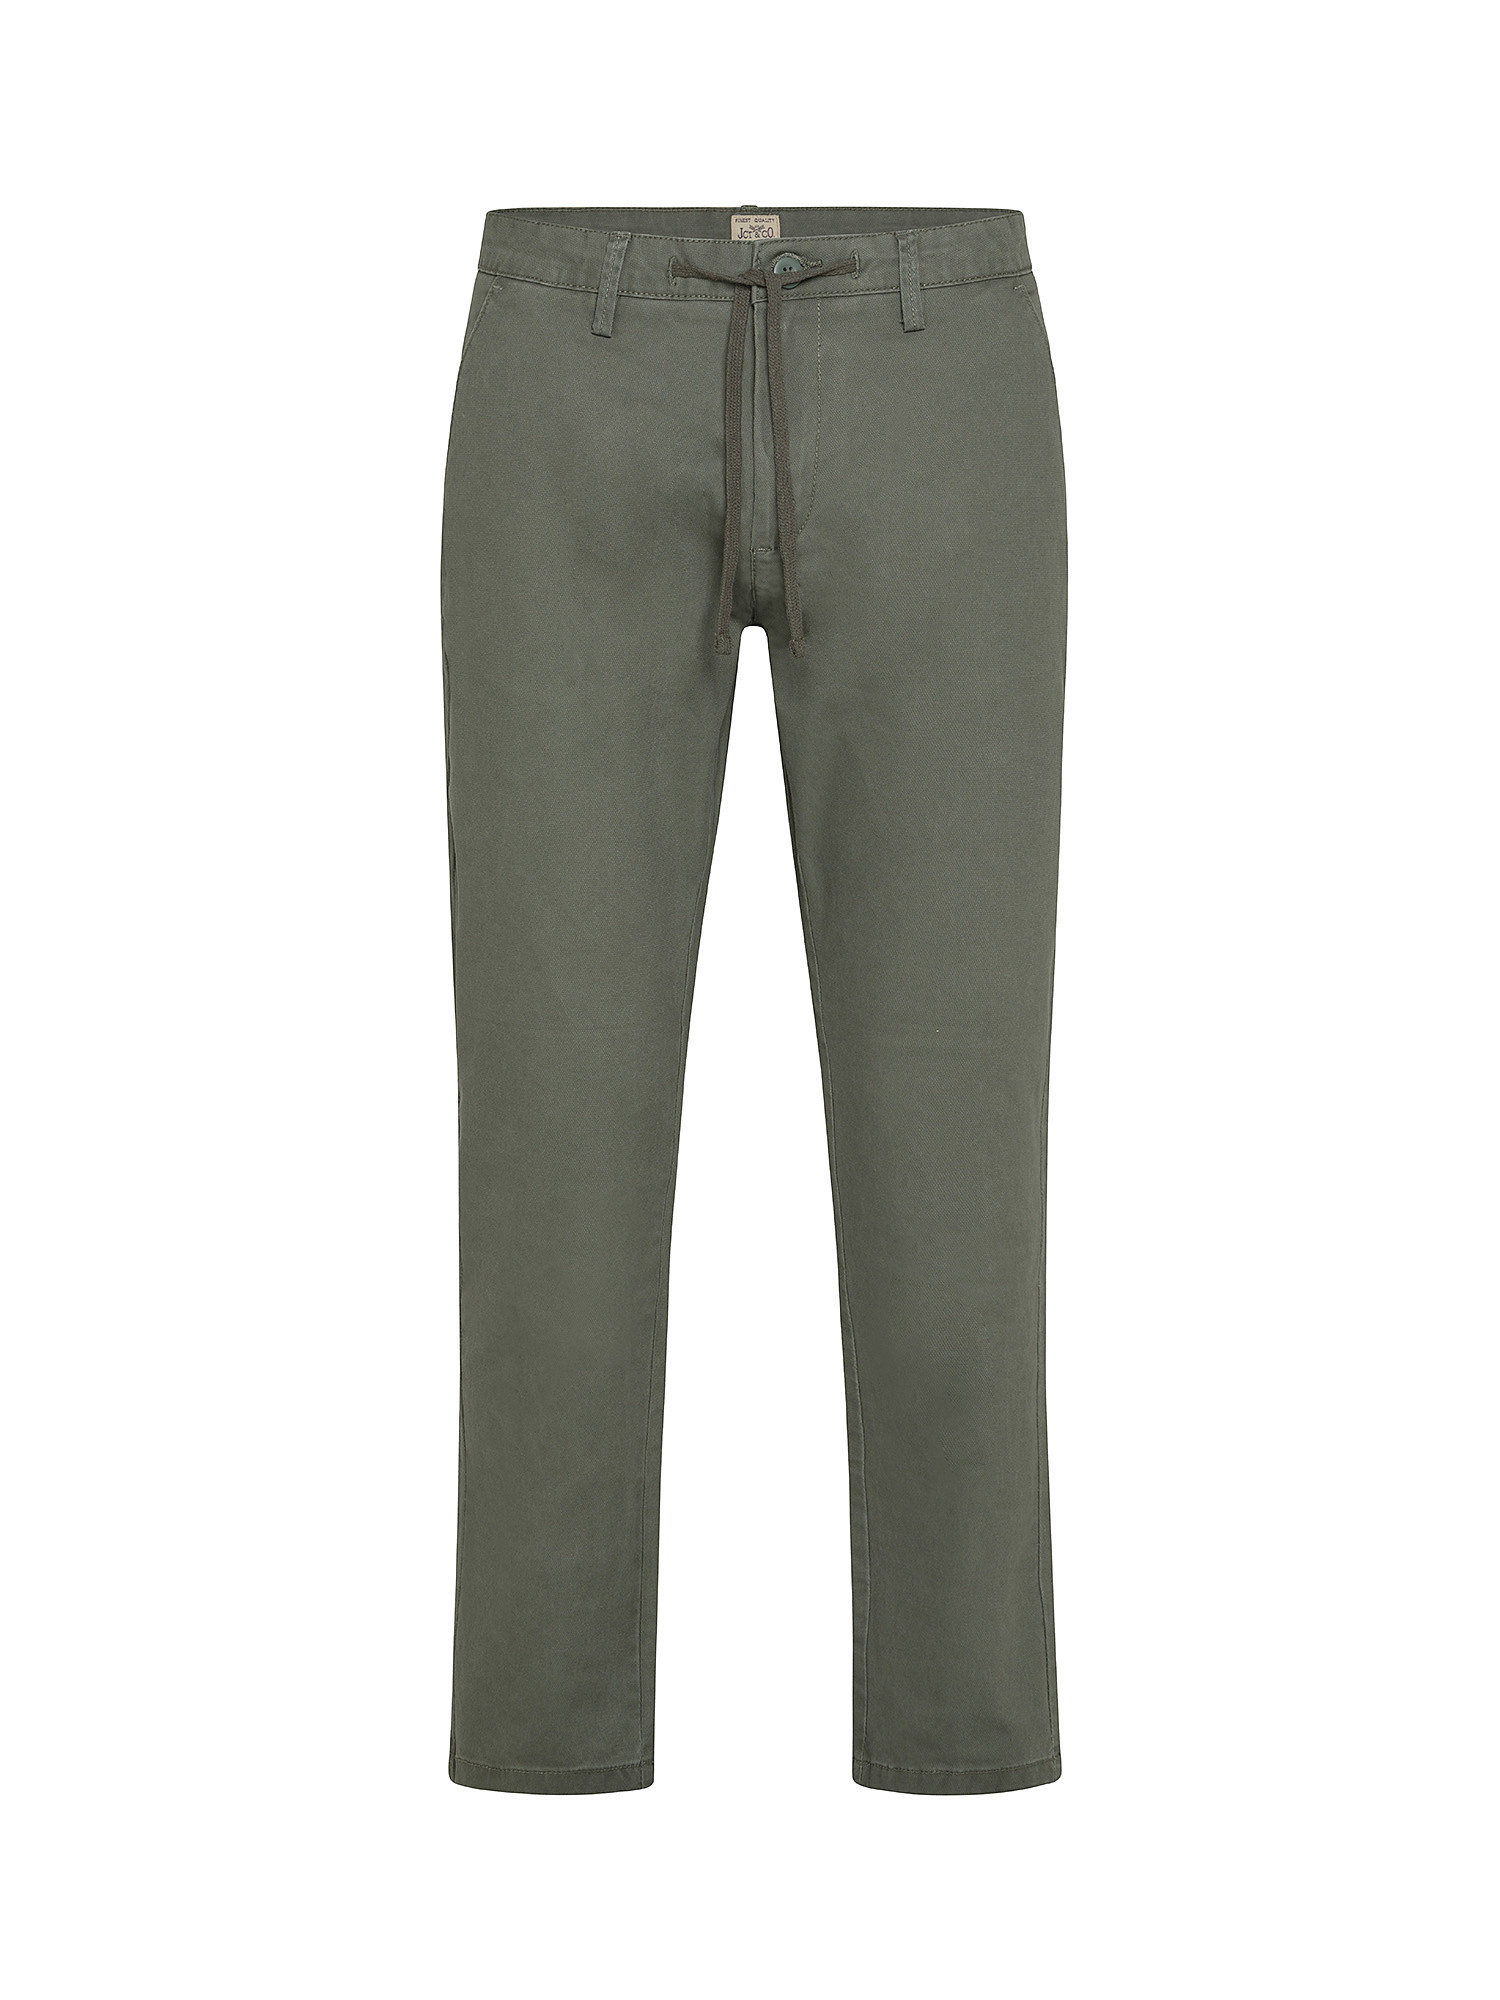 JCT - Pantaloni chino con coulisse, Verde, large